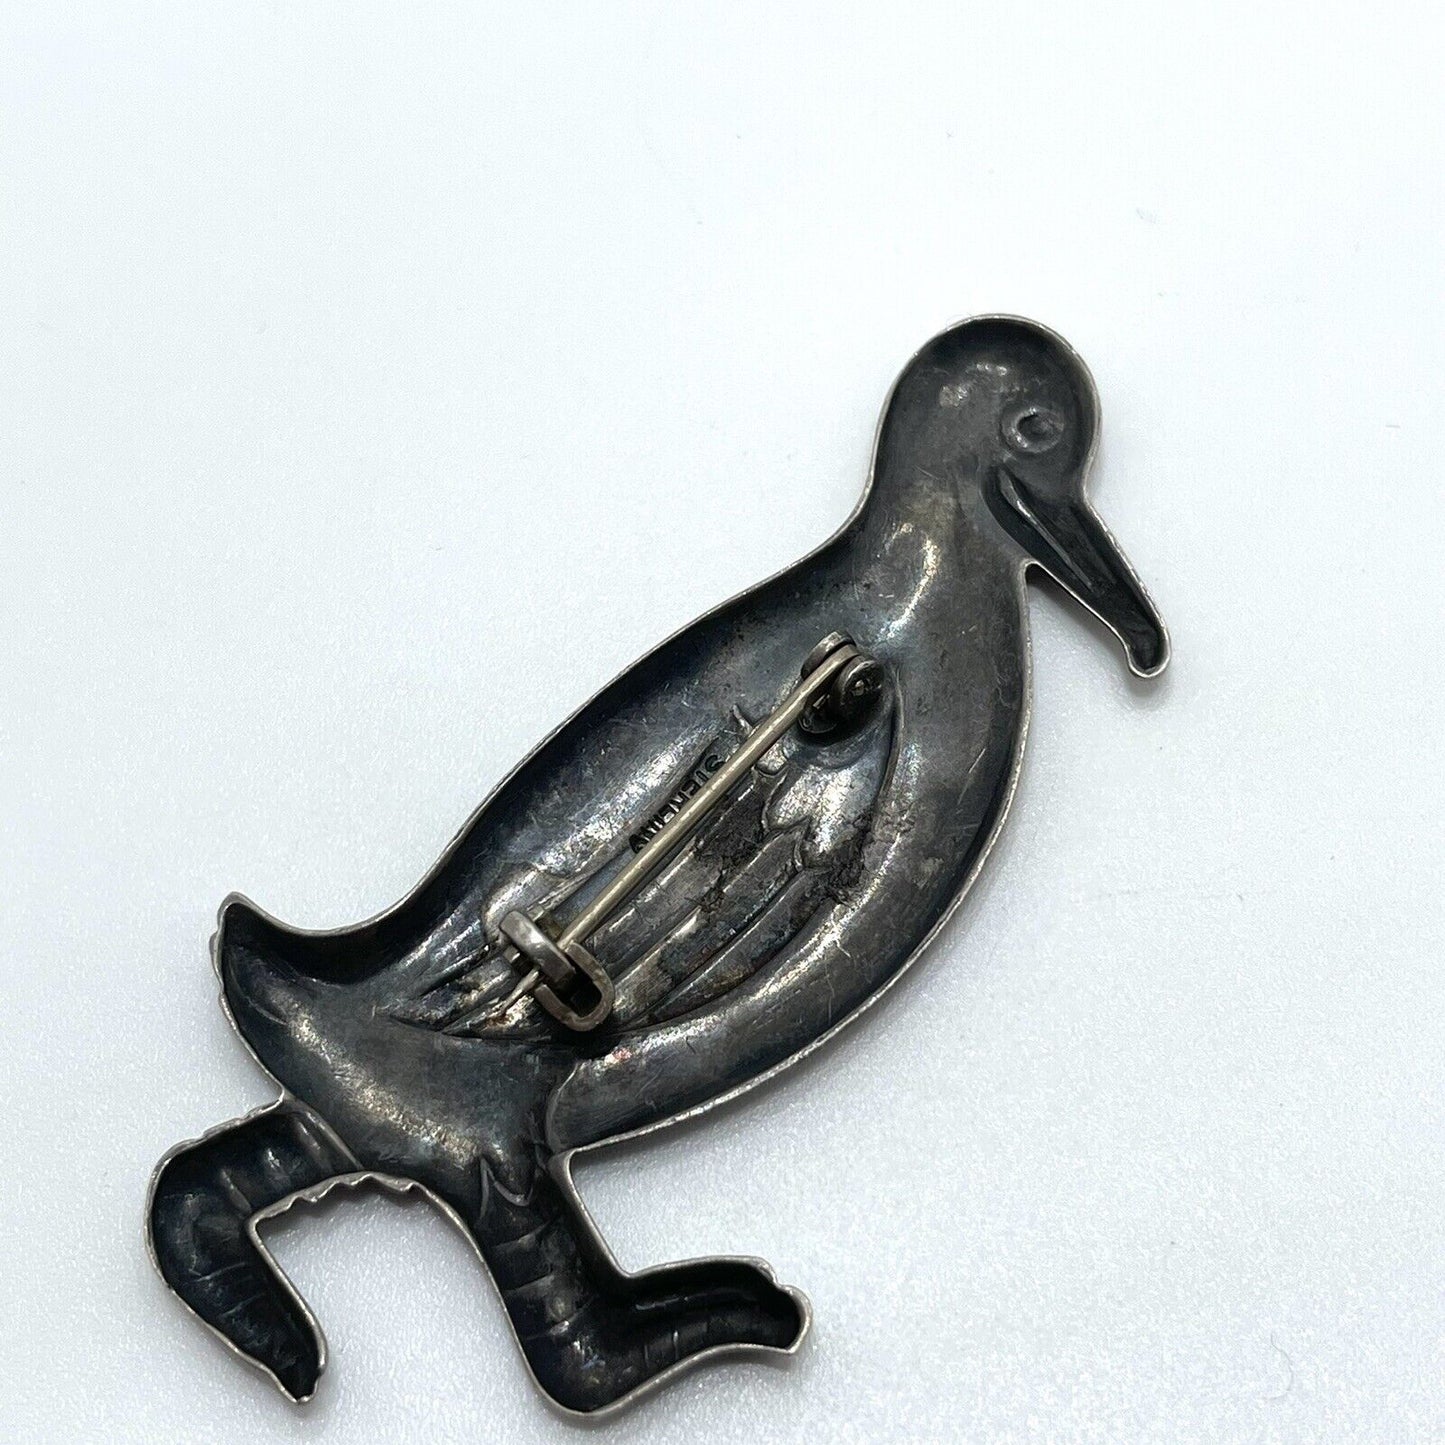 Vintage Sterling Silver Duck Pin / Brooch